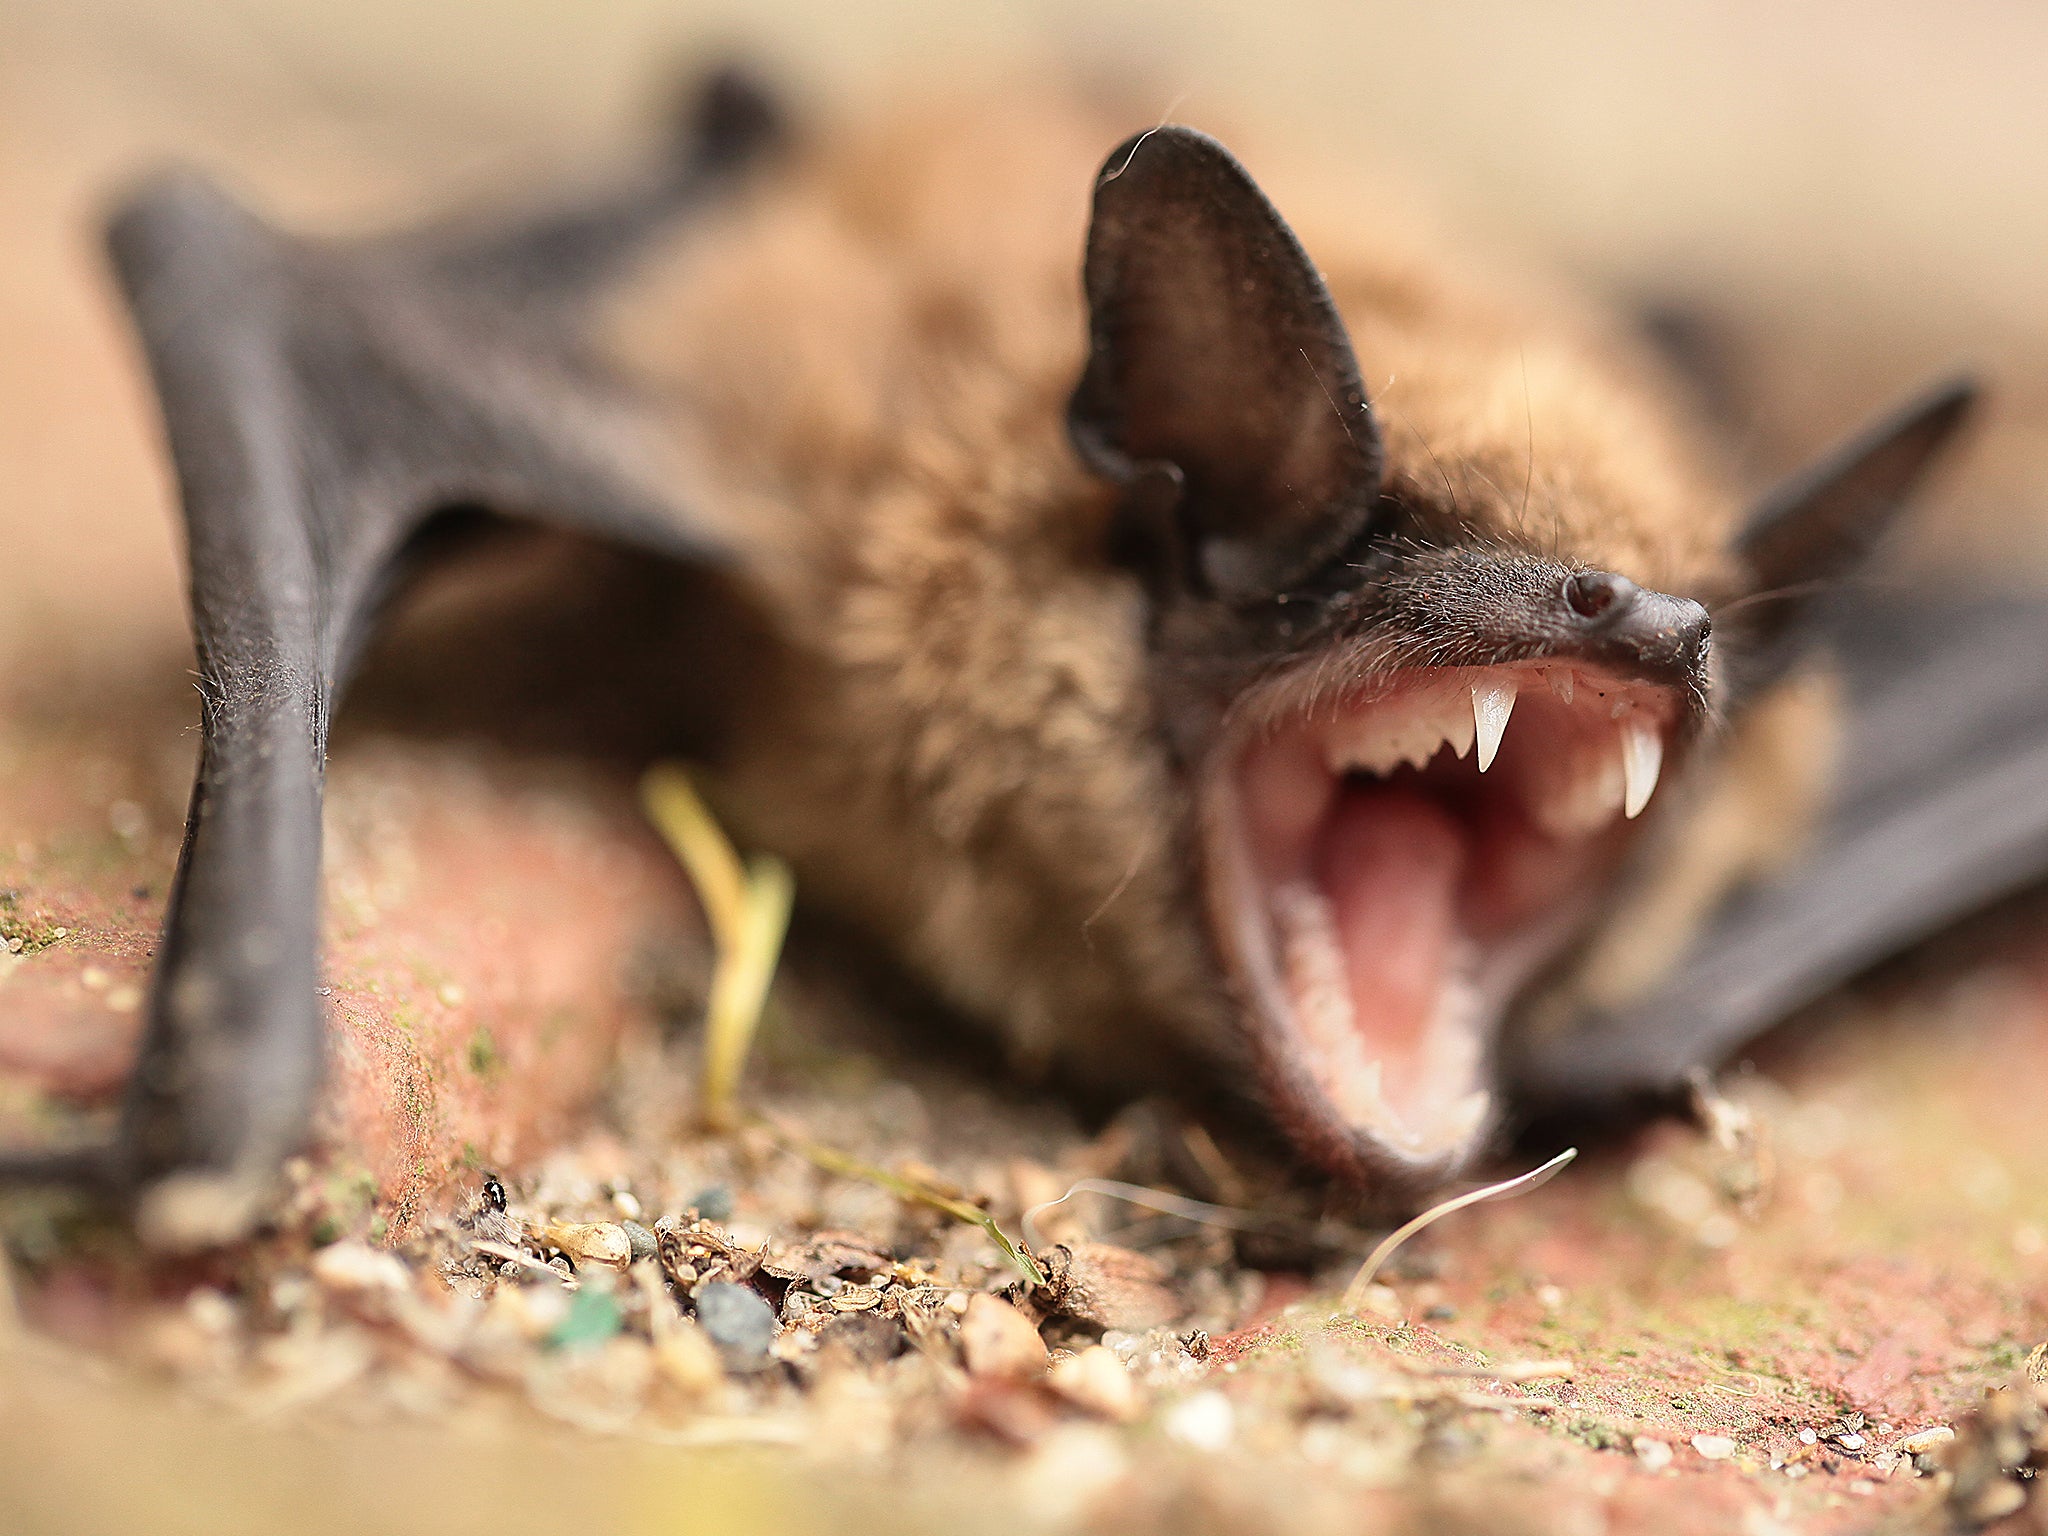 Dead bat found in Walmart bagged salad prompts rabies